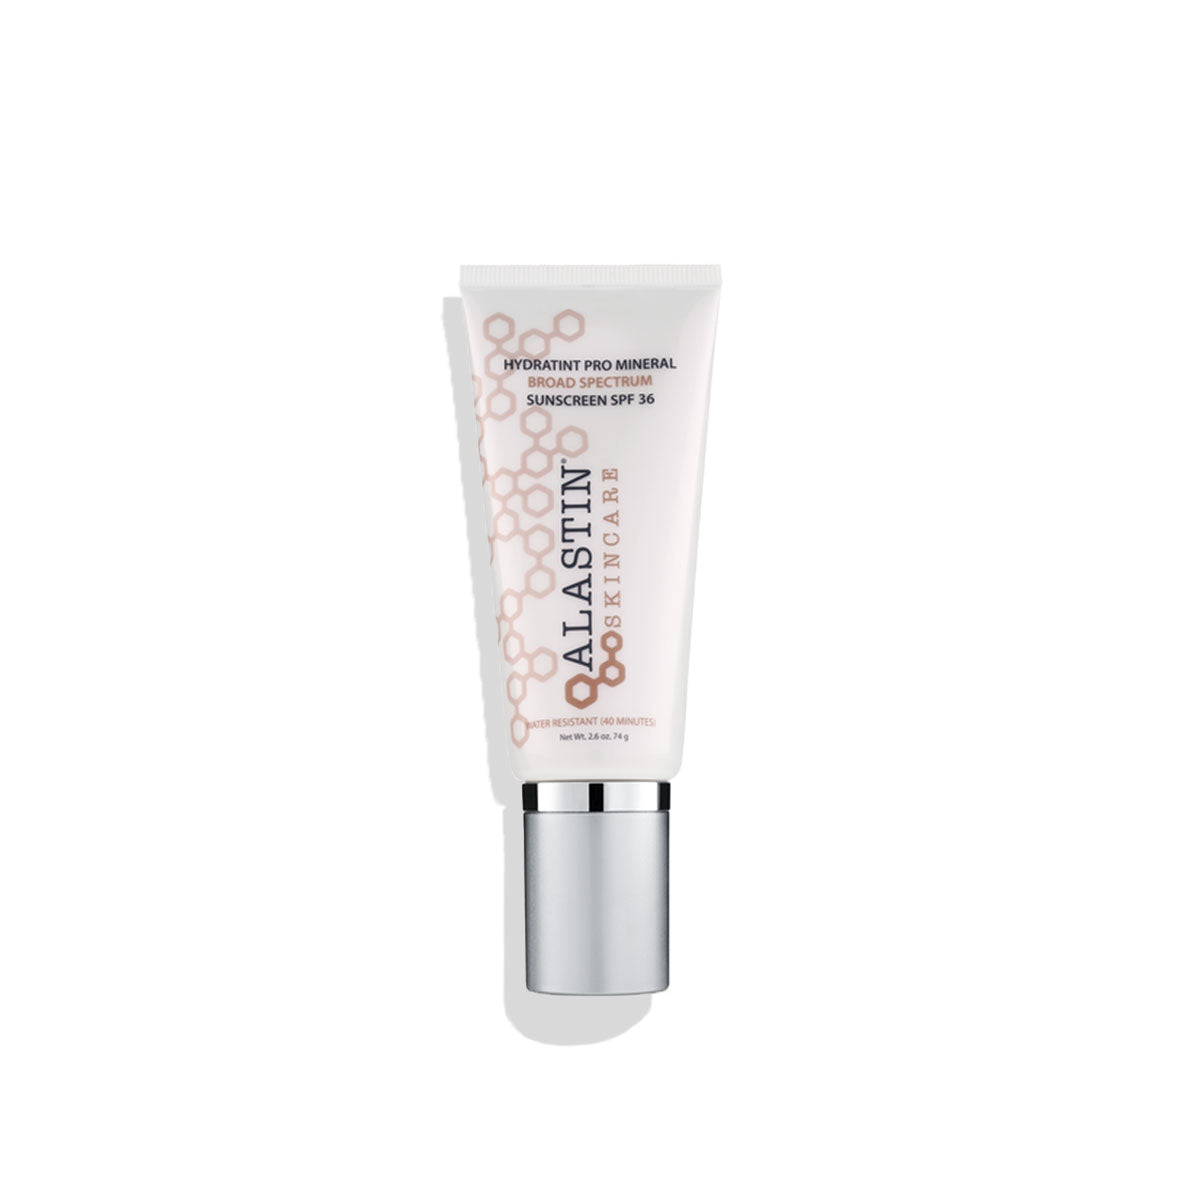 alastin skincare hydratint pro mineral broad spectrum sunscreen spf 36 tinted sunscreen moisturizer